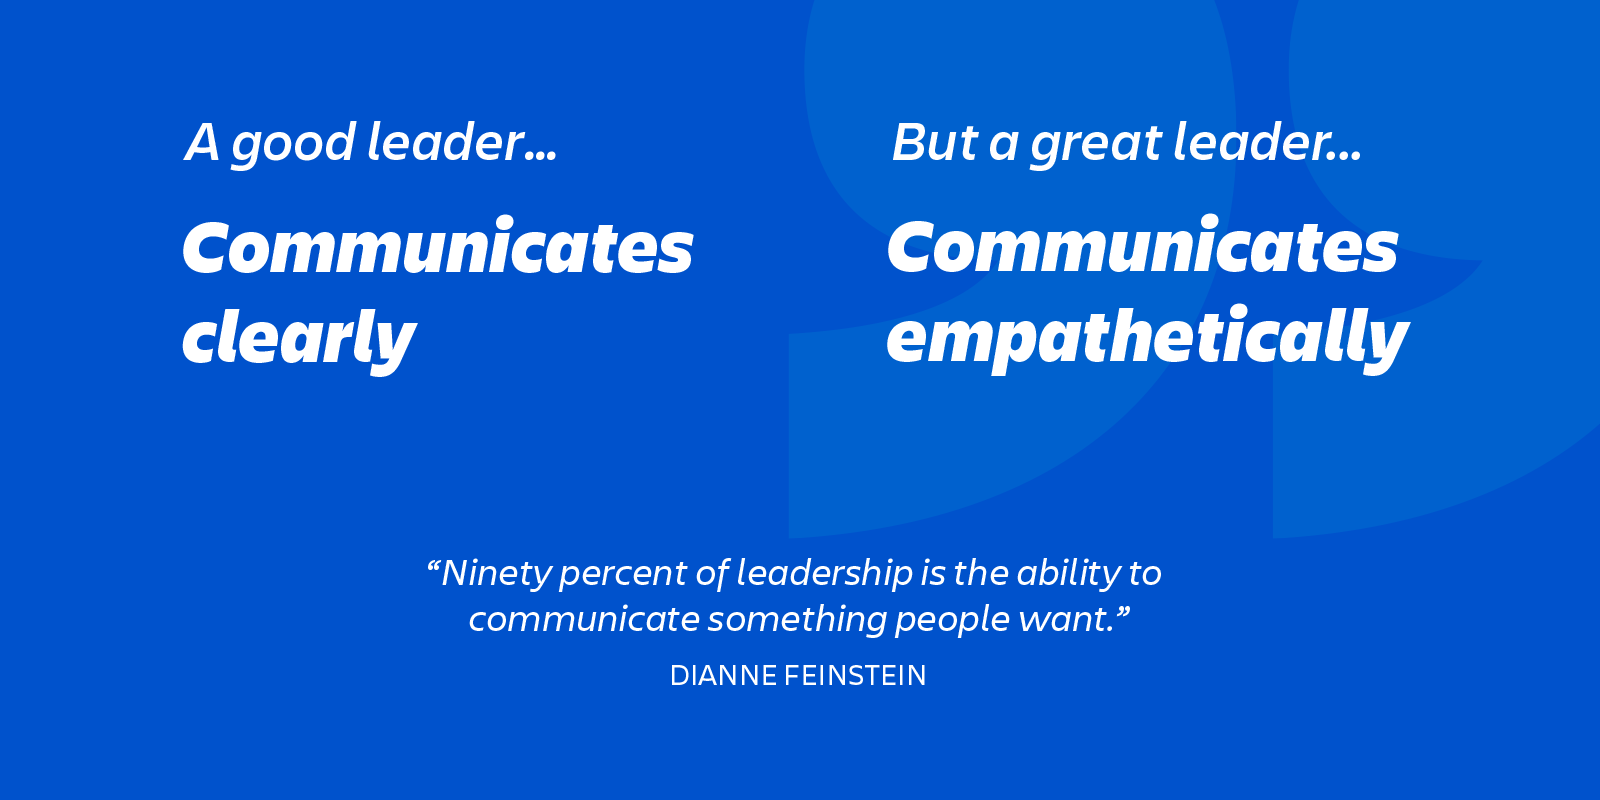 great leaders are empathetic communicators